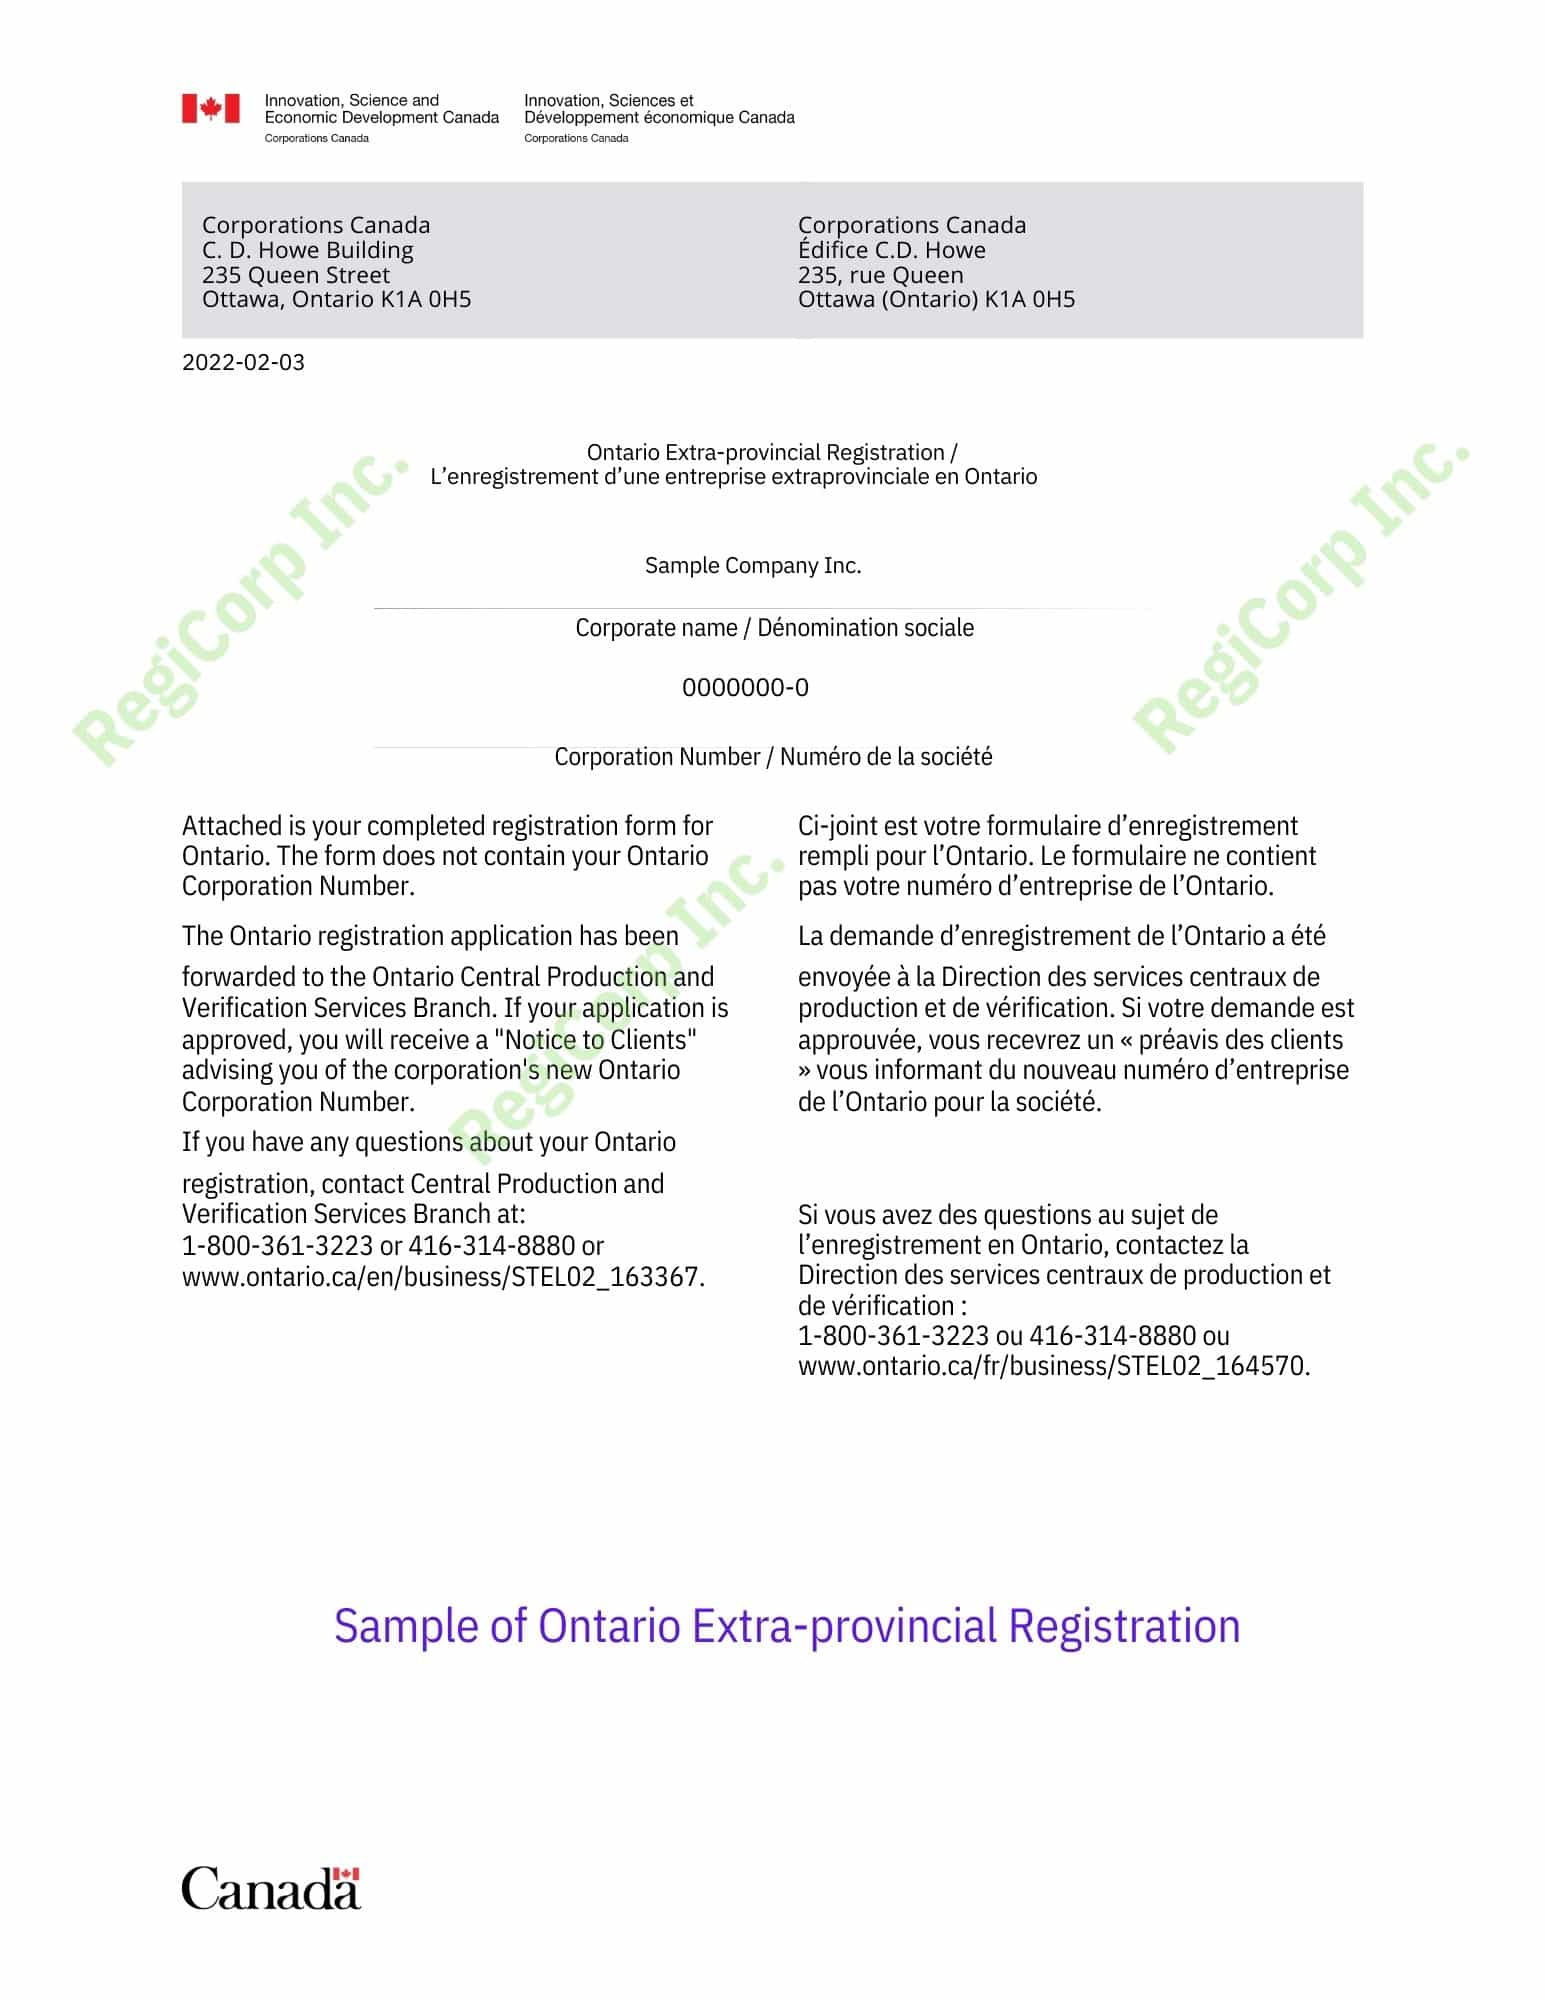 Extra Provincial Registration in Ontario